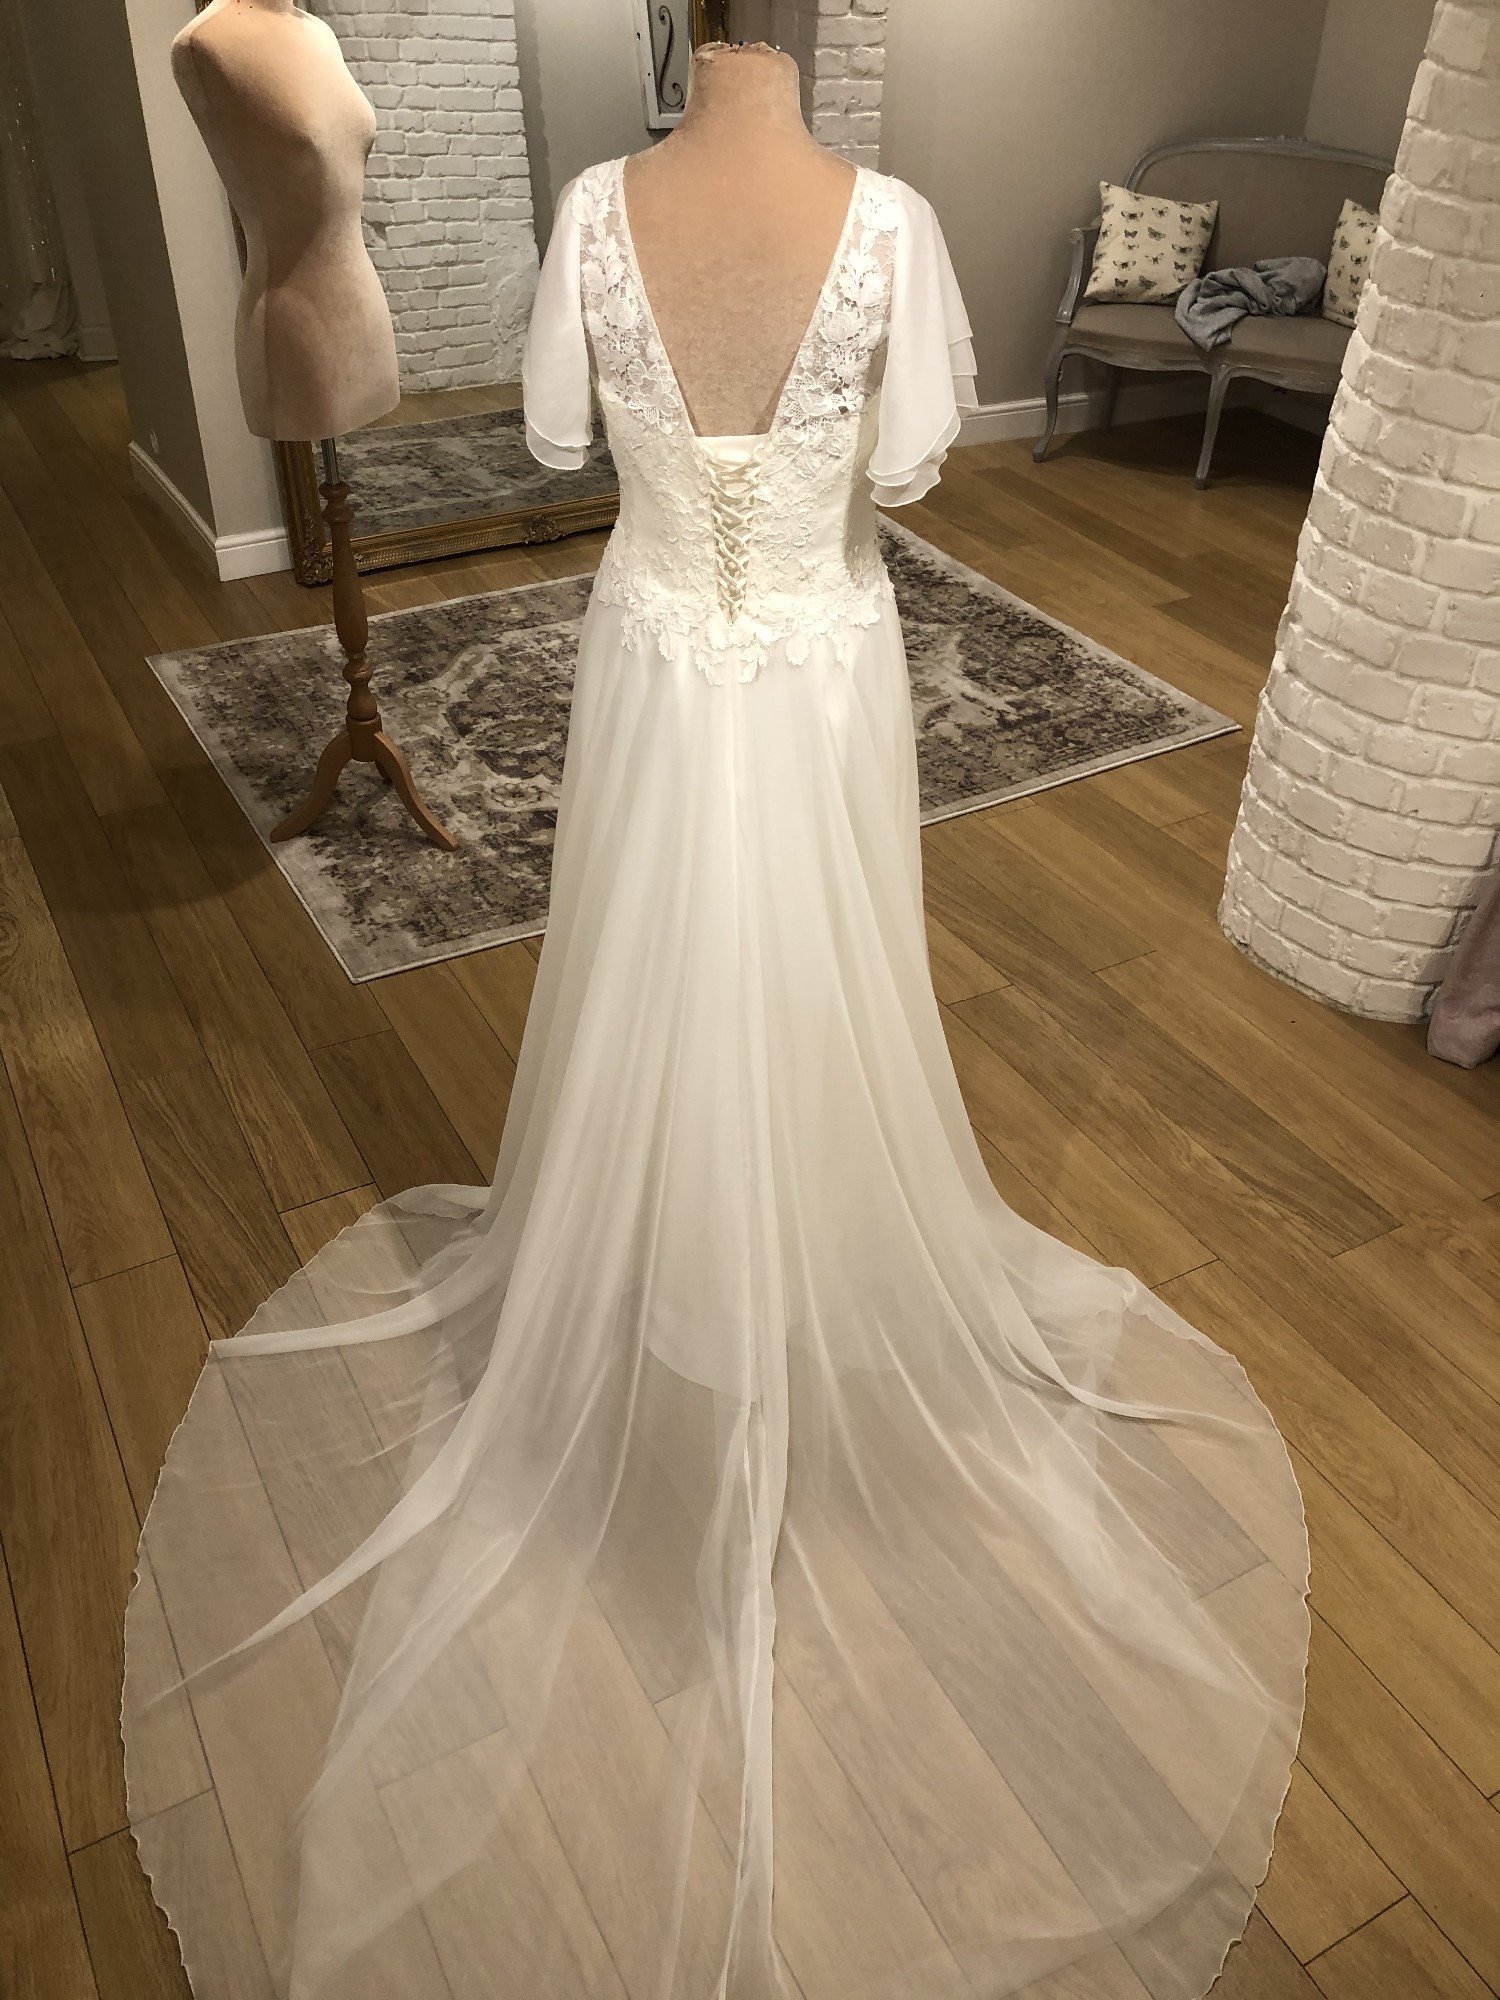 Agnes Bridal LO-148T/02/4 Sample Wedding Dress Save 91% - Stillwhite